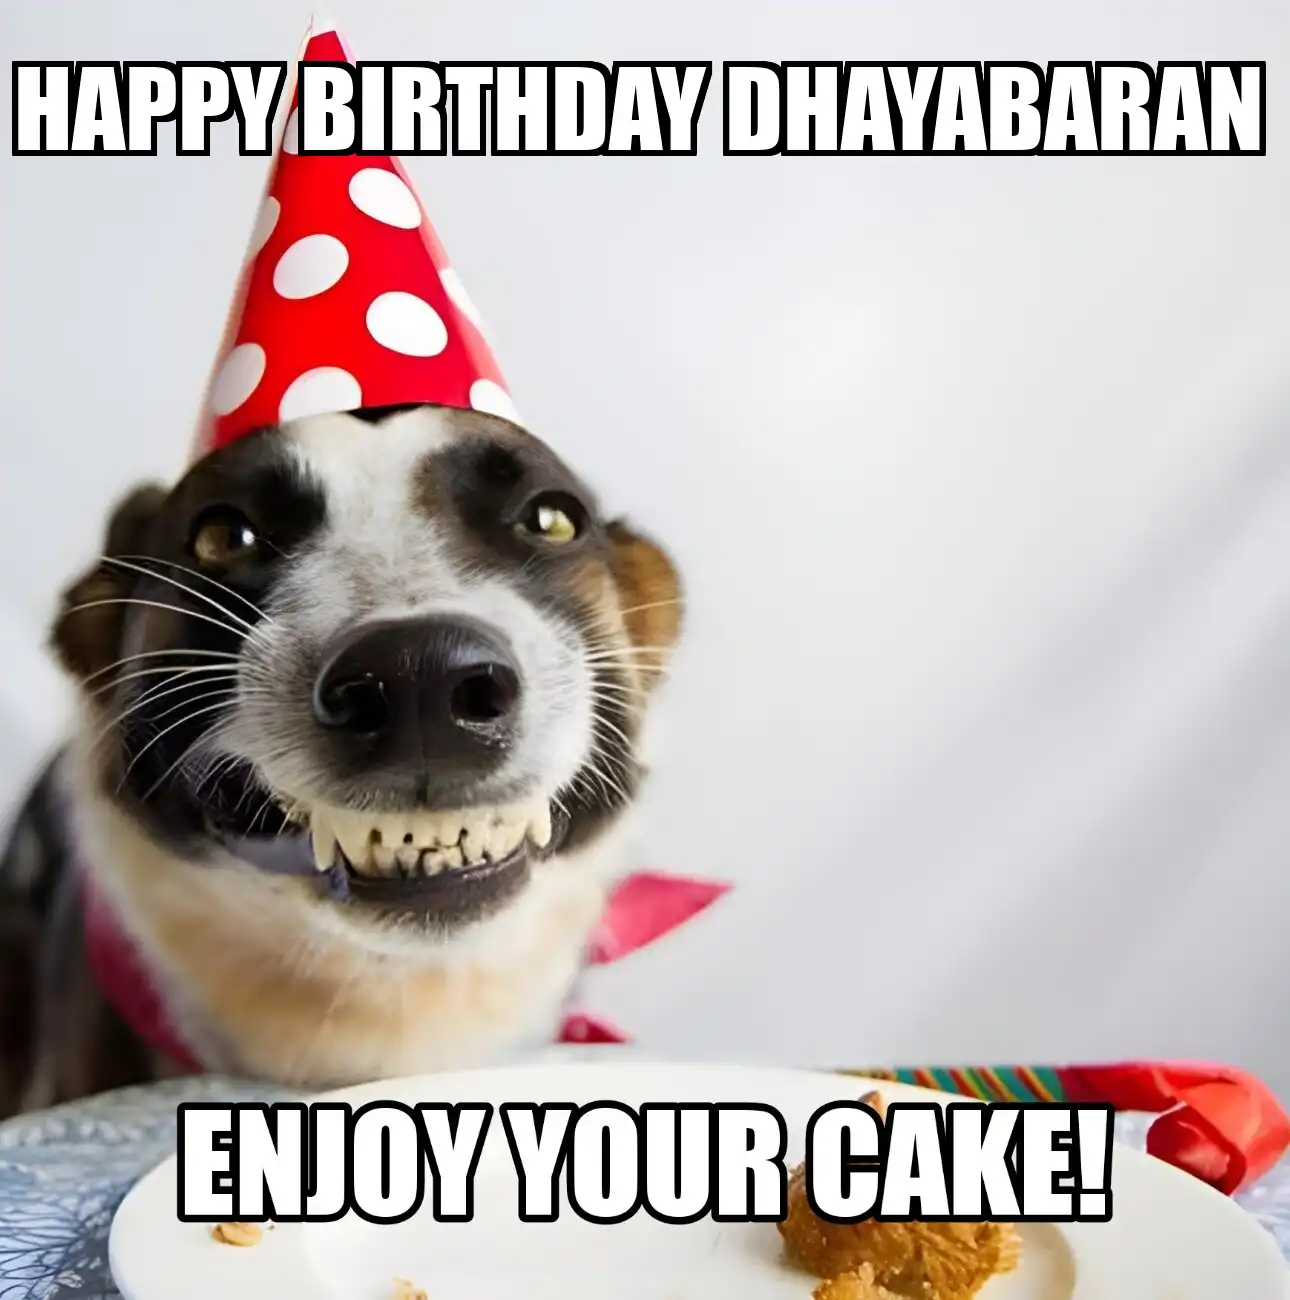 Happy Birthday Dhayabaran Enjoy Your Cake Dog Meme